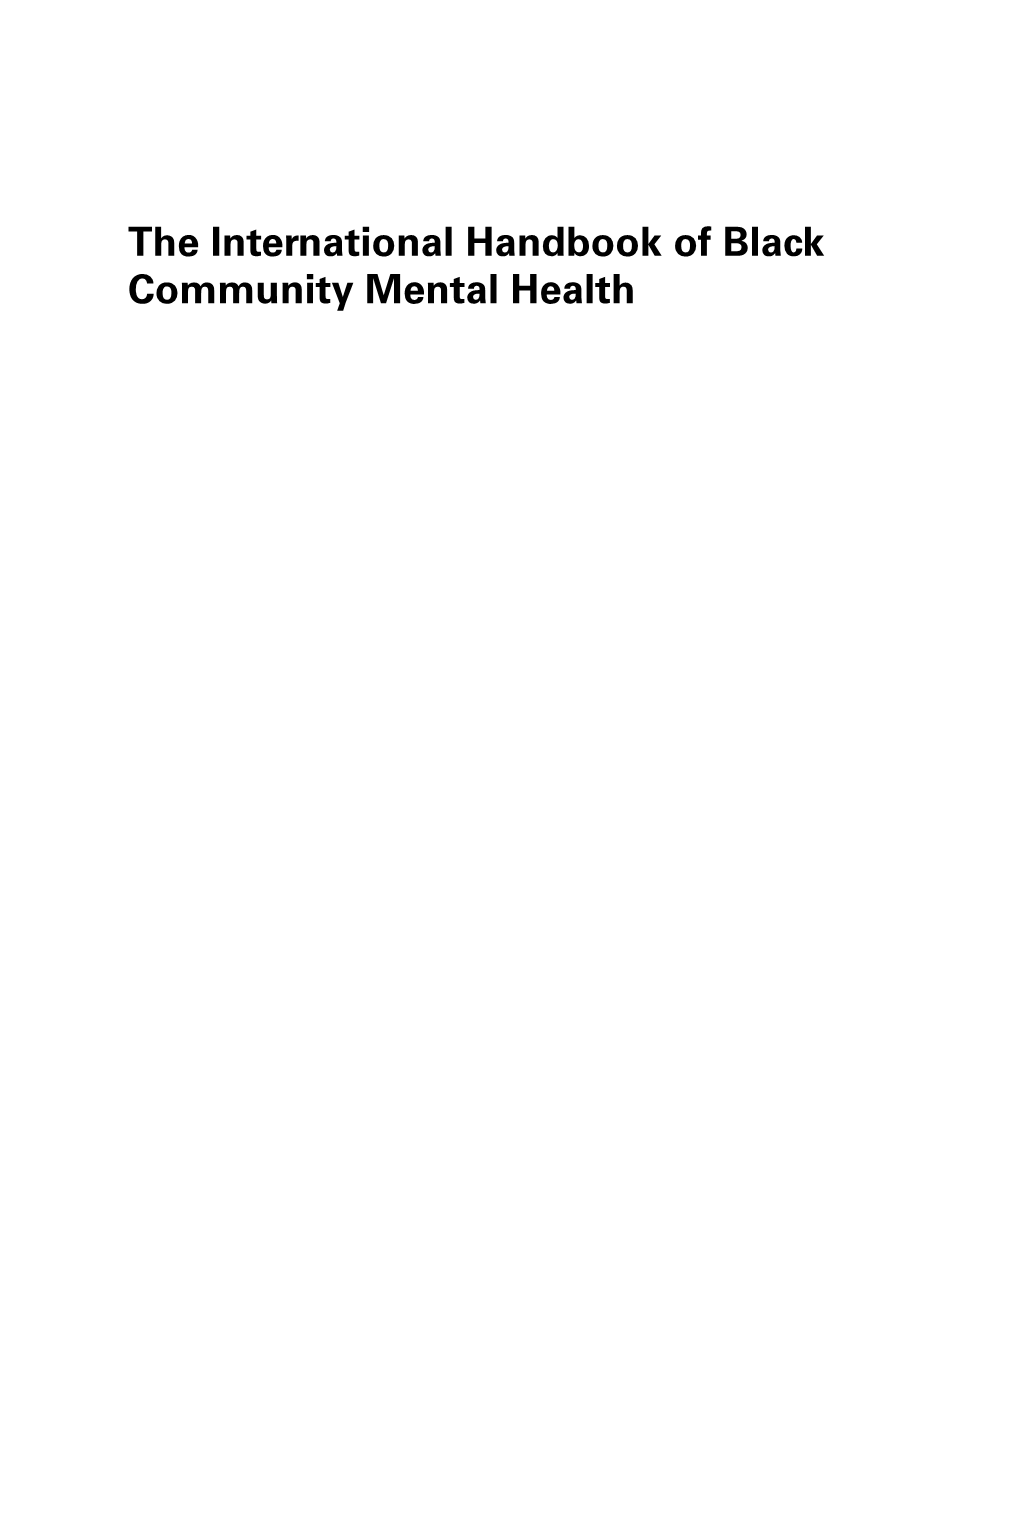 The International Handbook of Black Community Mental Health Endorsements